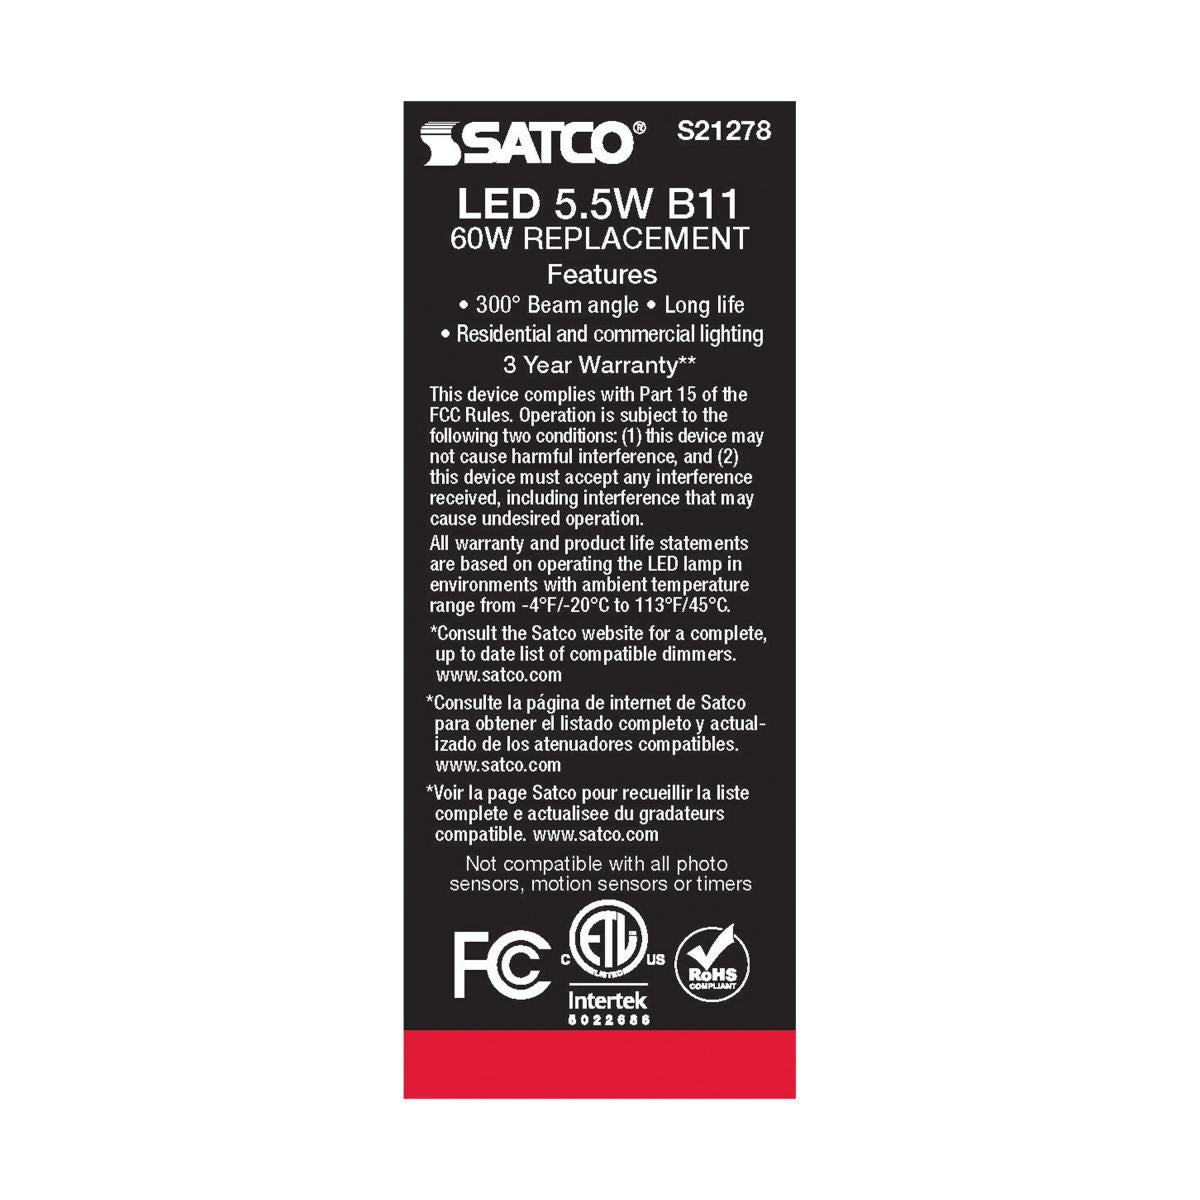 Satco LED 60W Equivalent Torpedo Bulb – 5.5W – E12 Candelabra Base – Frosted – Warm White – 2700K